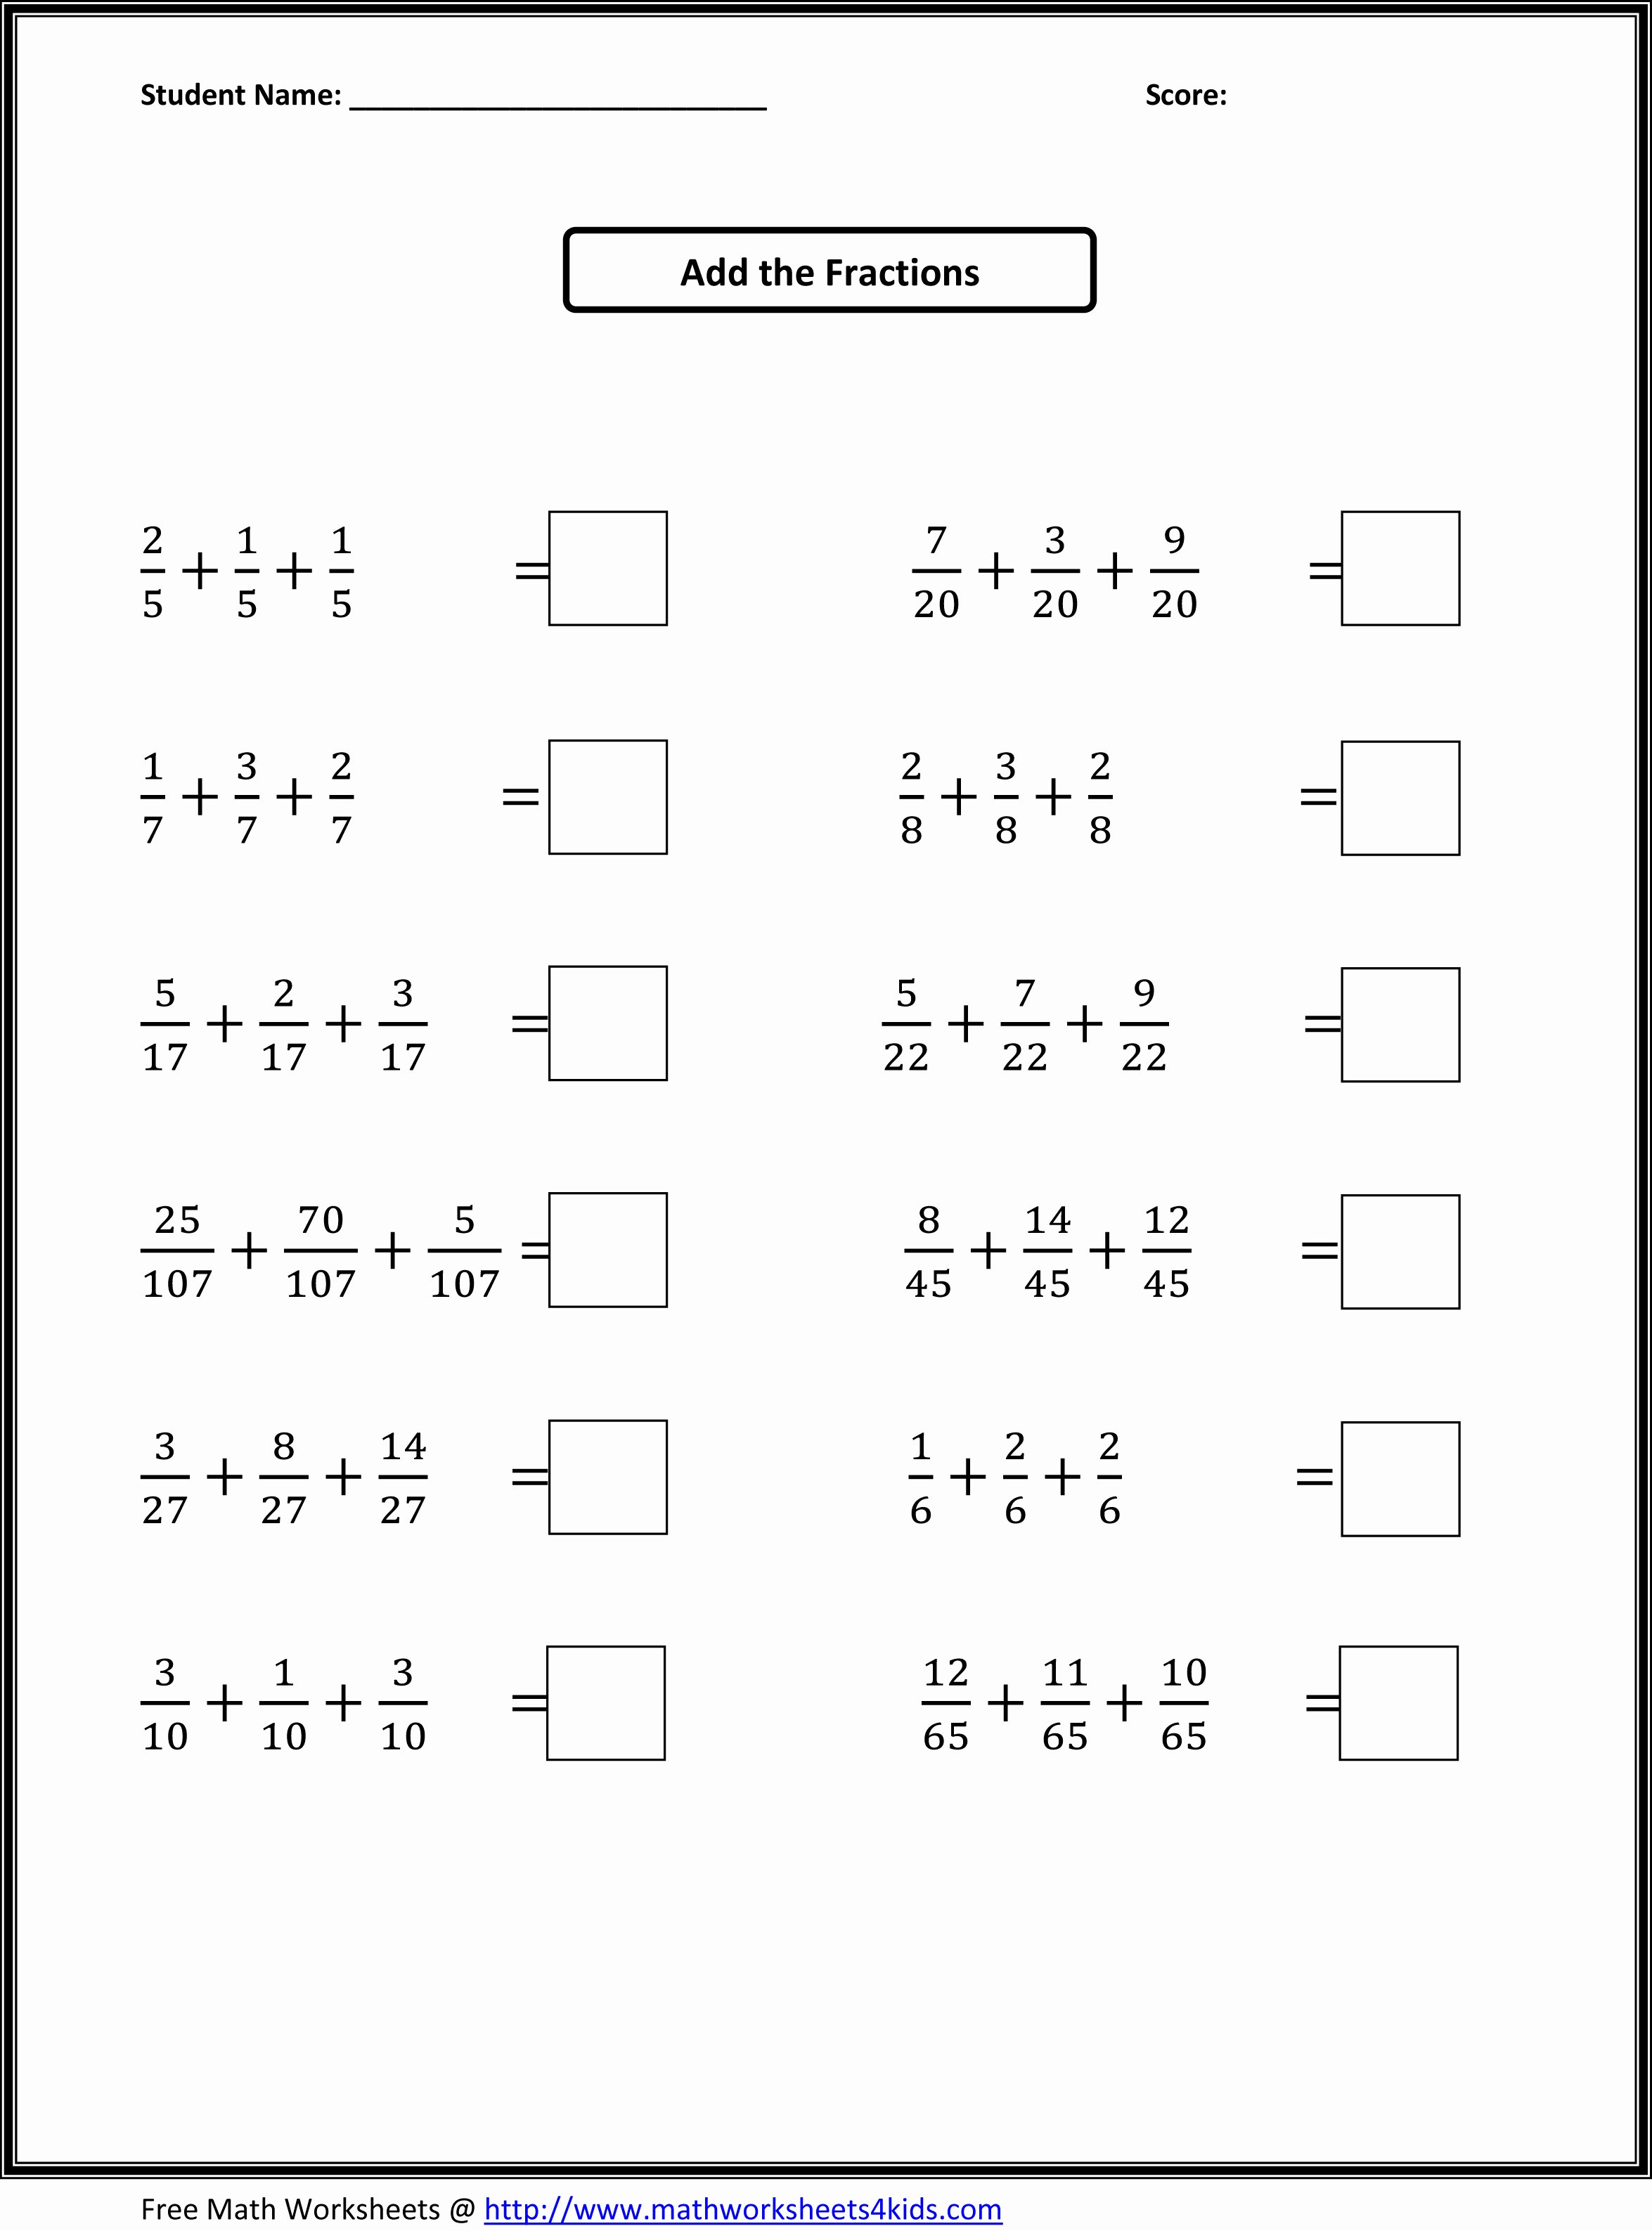 Adding Fractions Worksheet Pdf Fresh Fourth Grade Math Worksheets